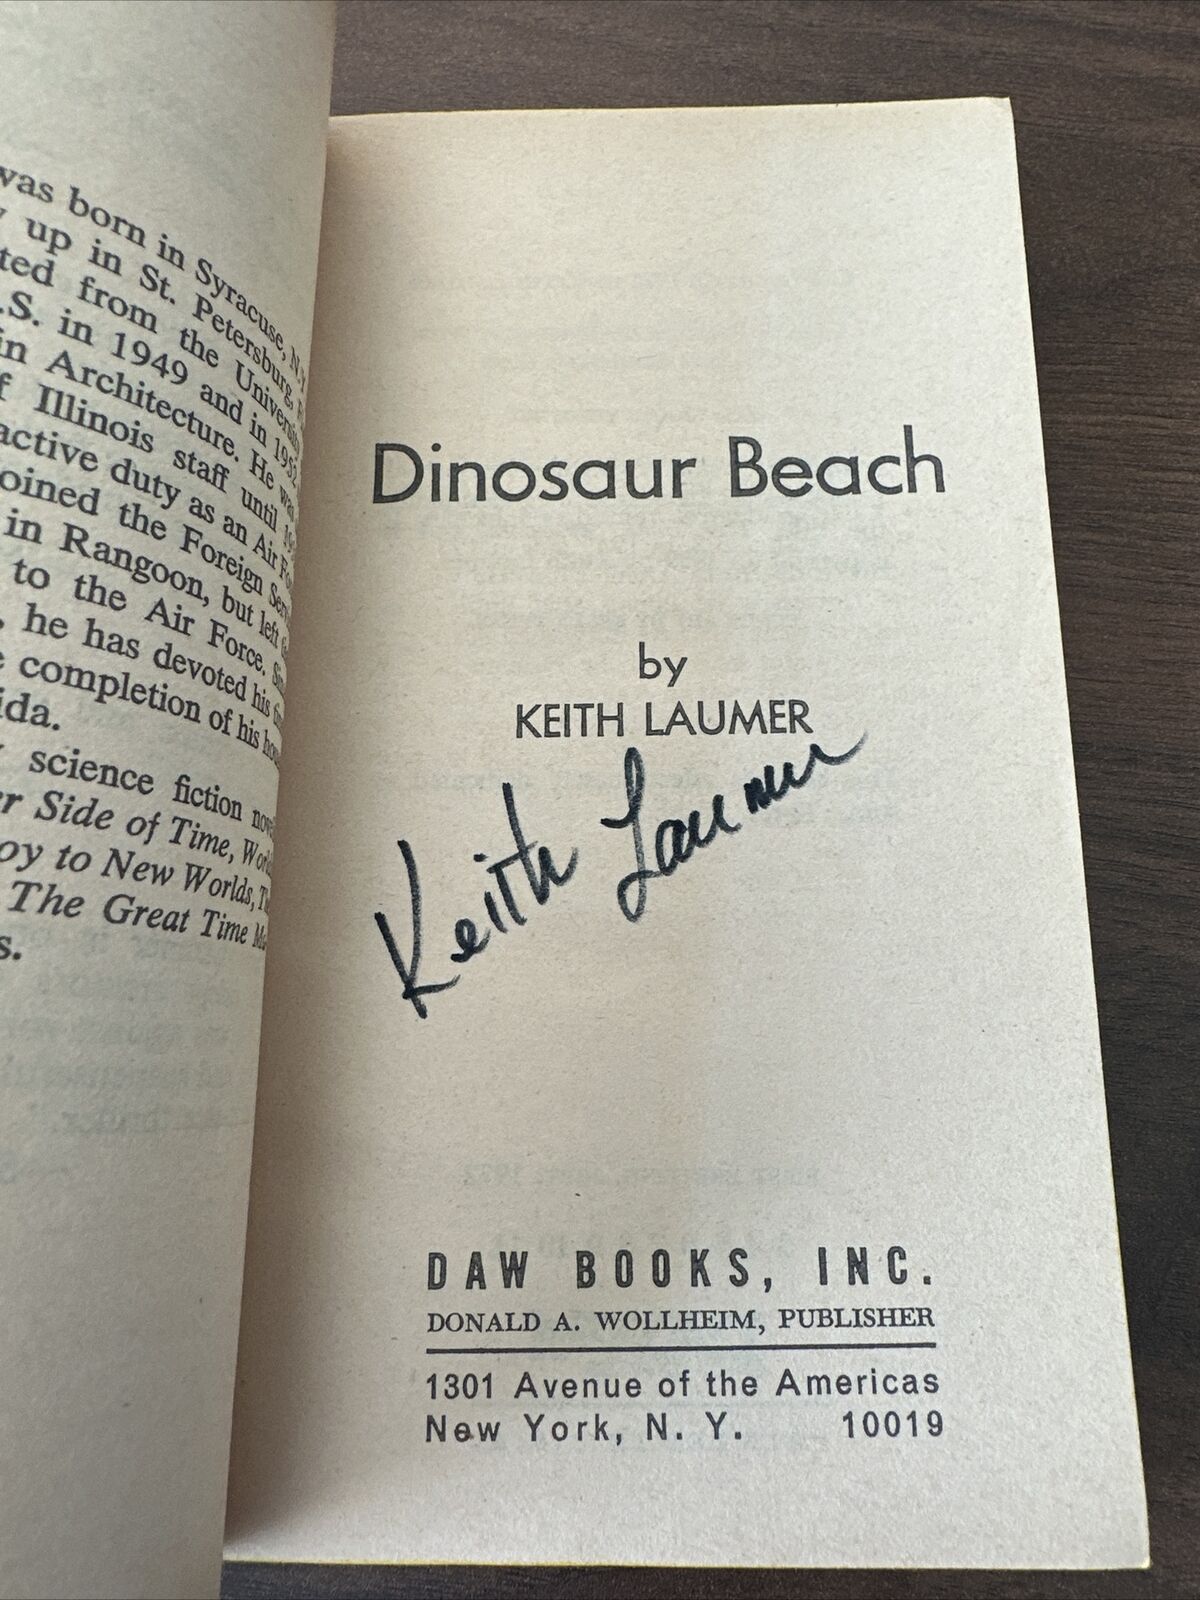 Dinosaur Beach - Keith Laumer - Signed 1974 Paperback